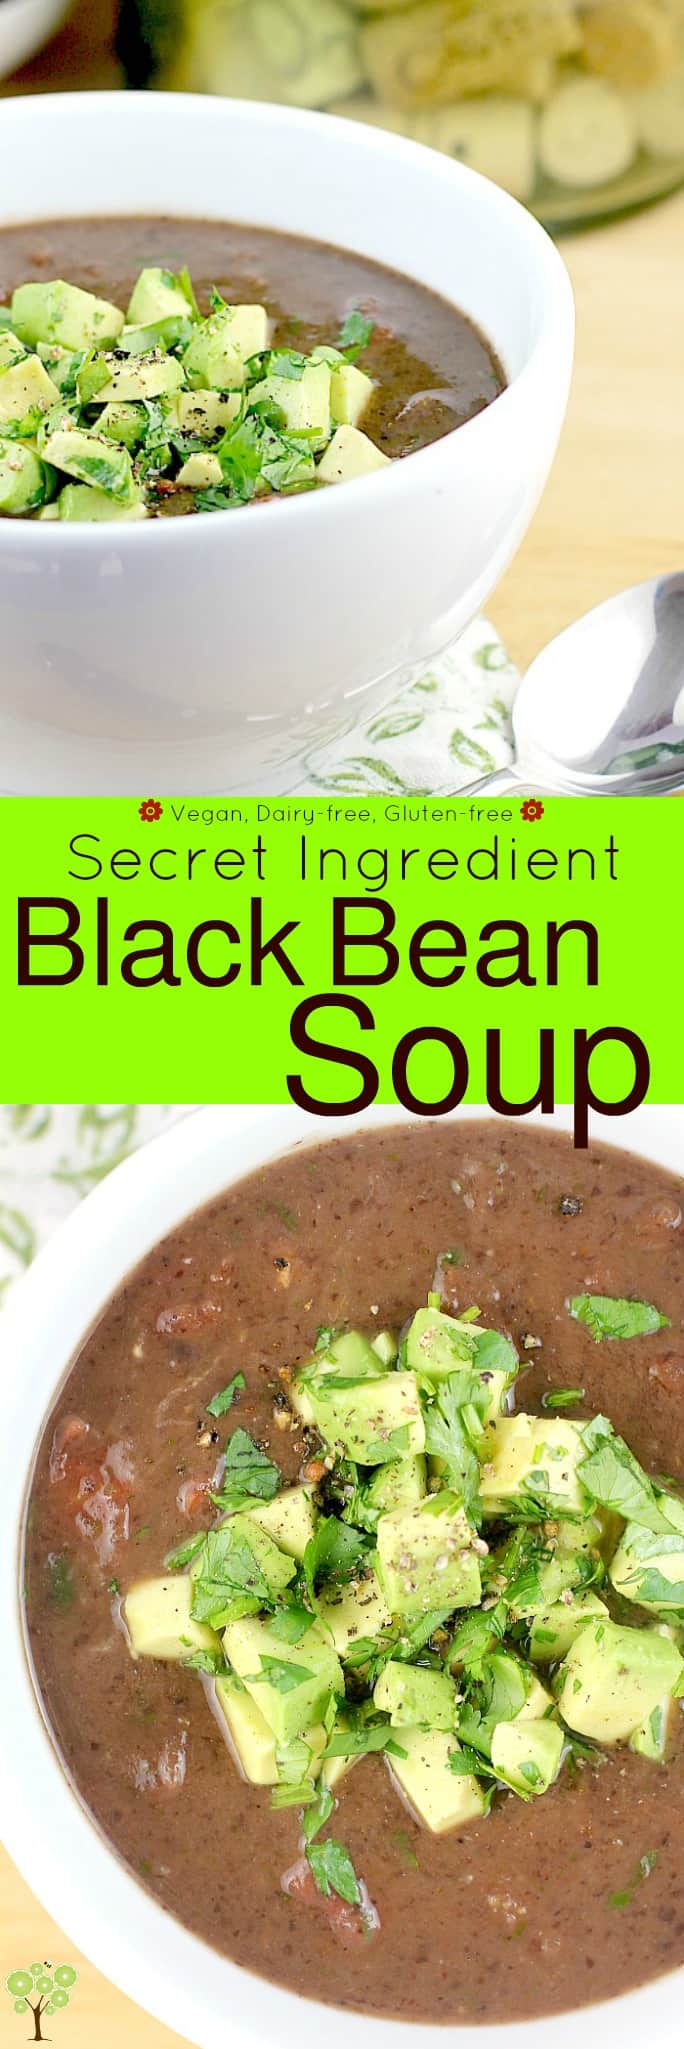 Secret Ingredient Black Bean Soup http://wp.me/p4qC4h-3IC